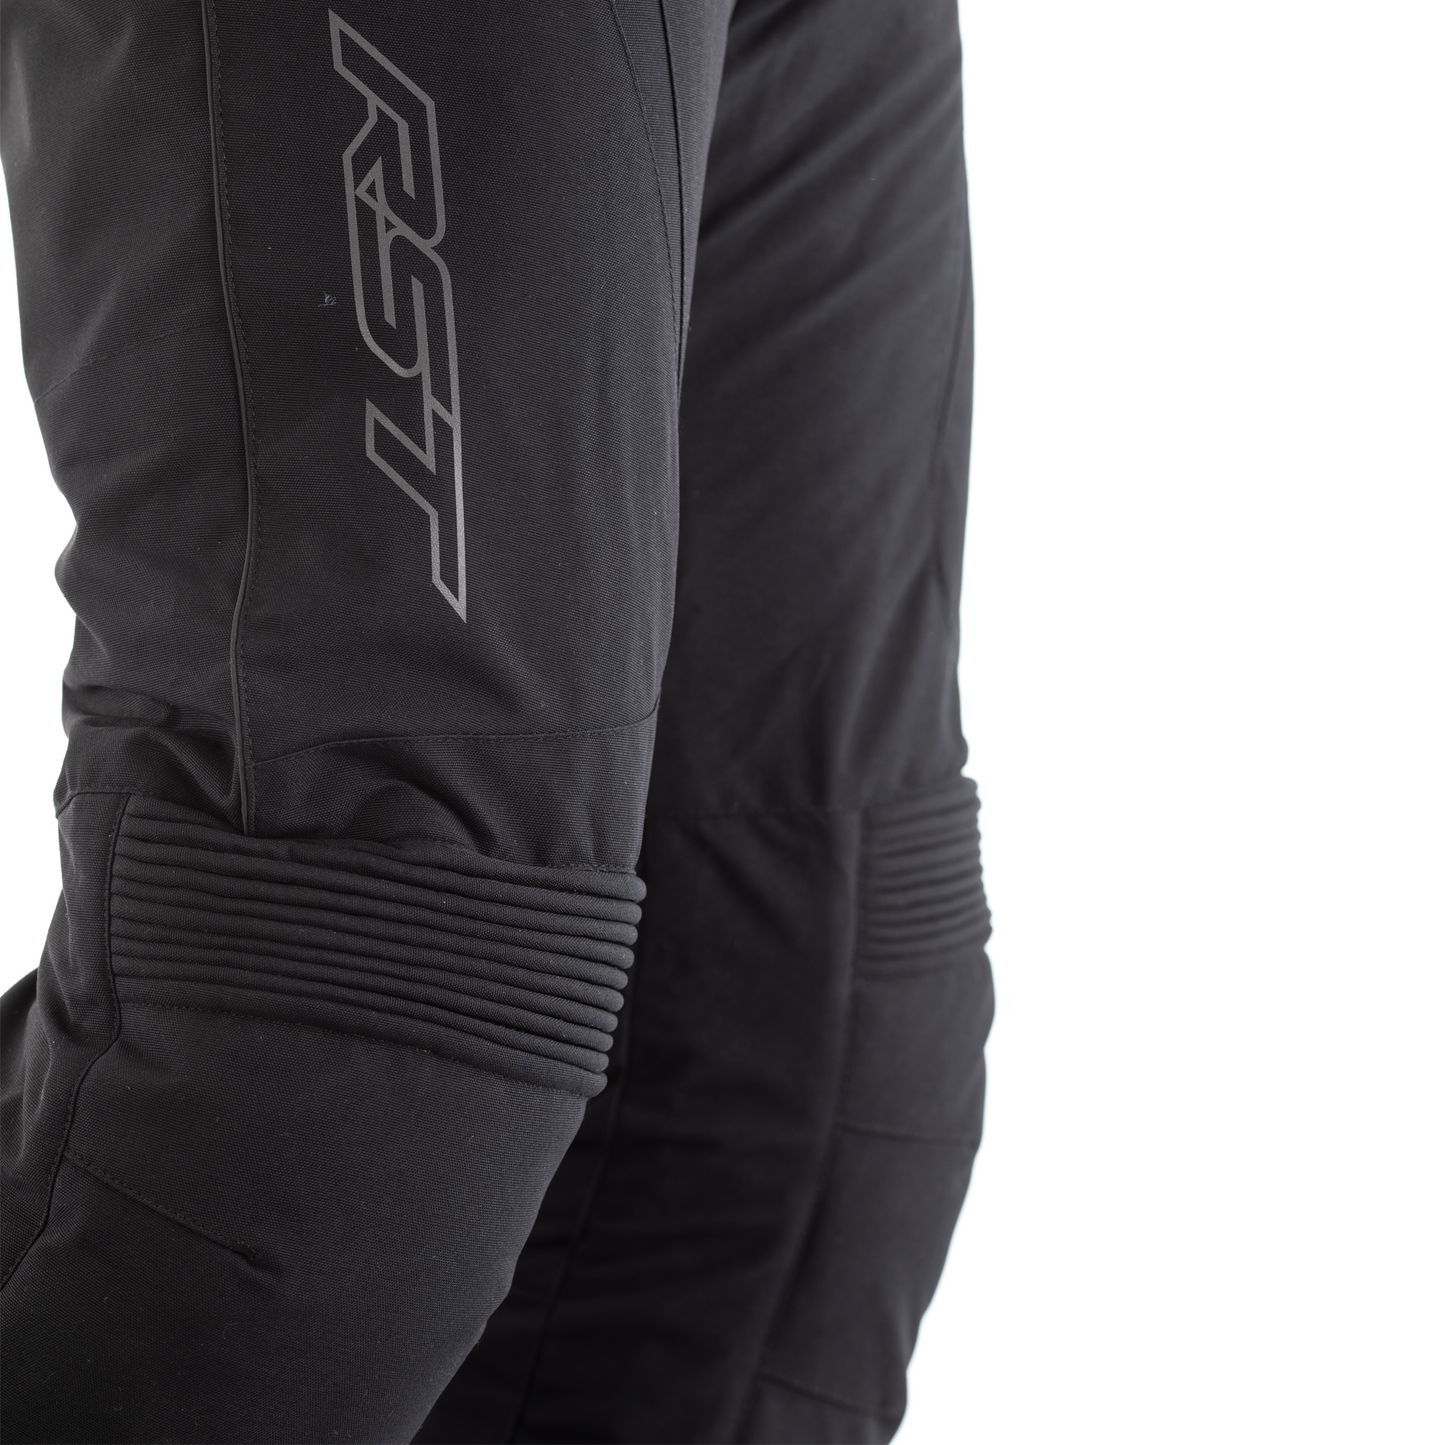 RST Syncro (CE) Men's Textile Riding Jeans - Regular Leg - Black